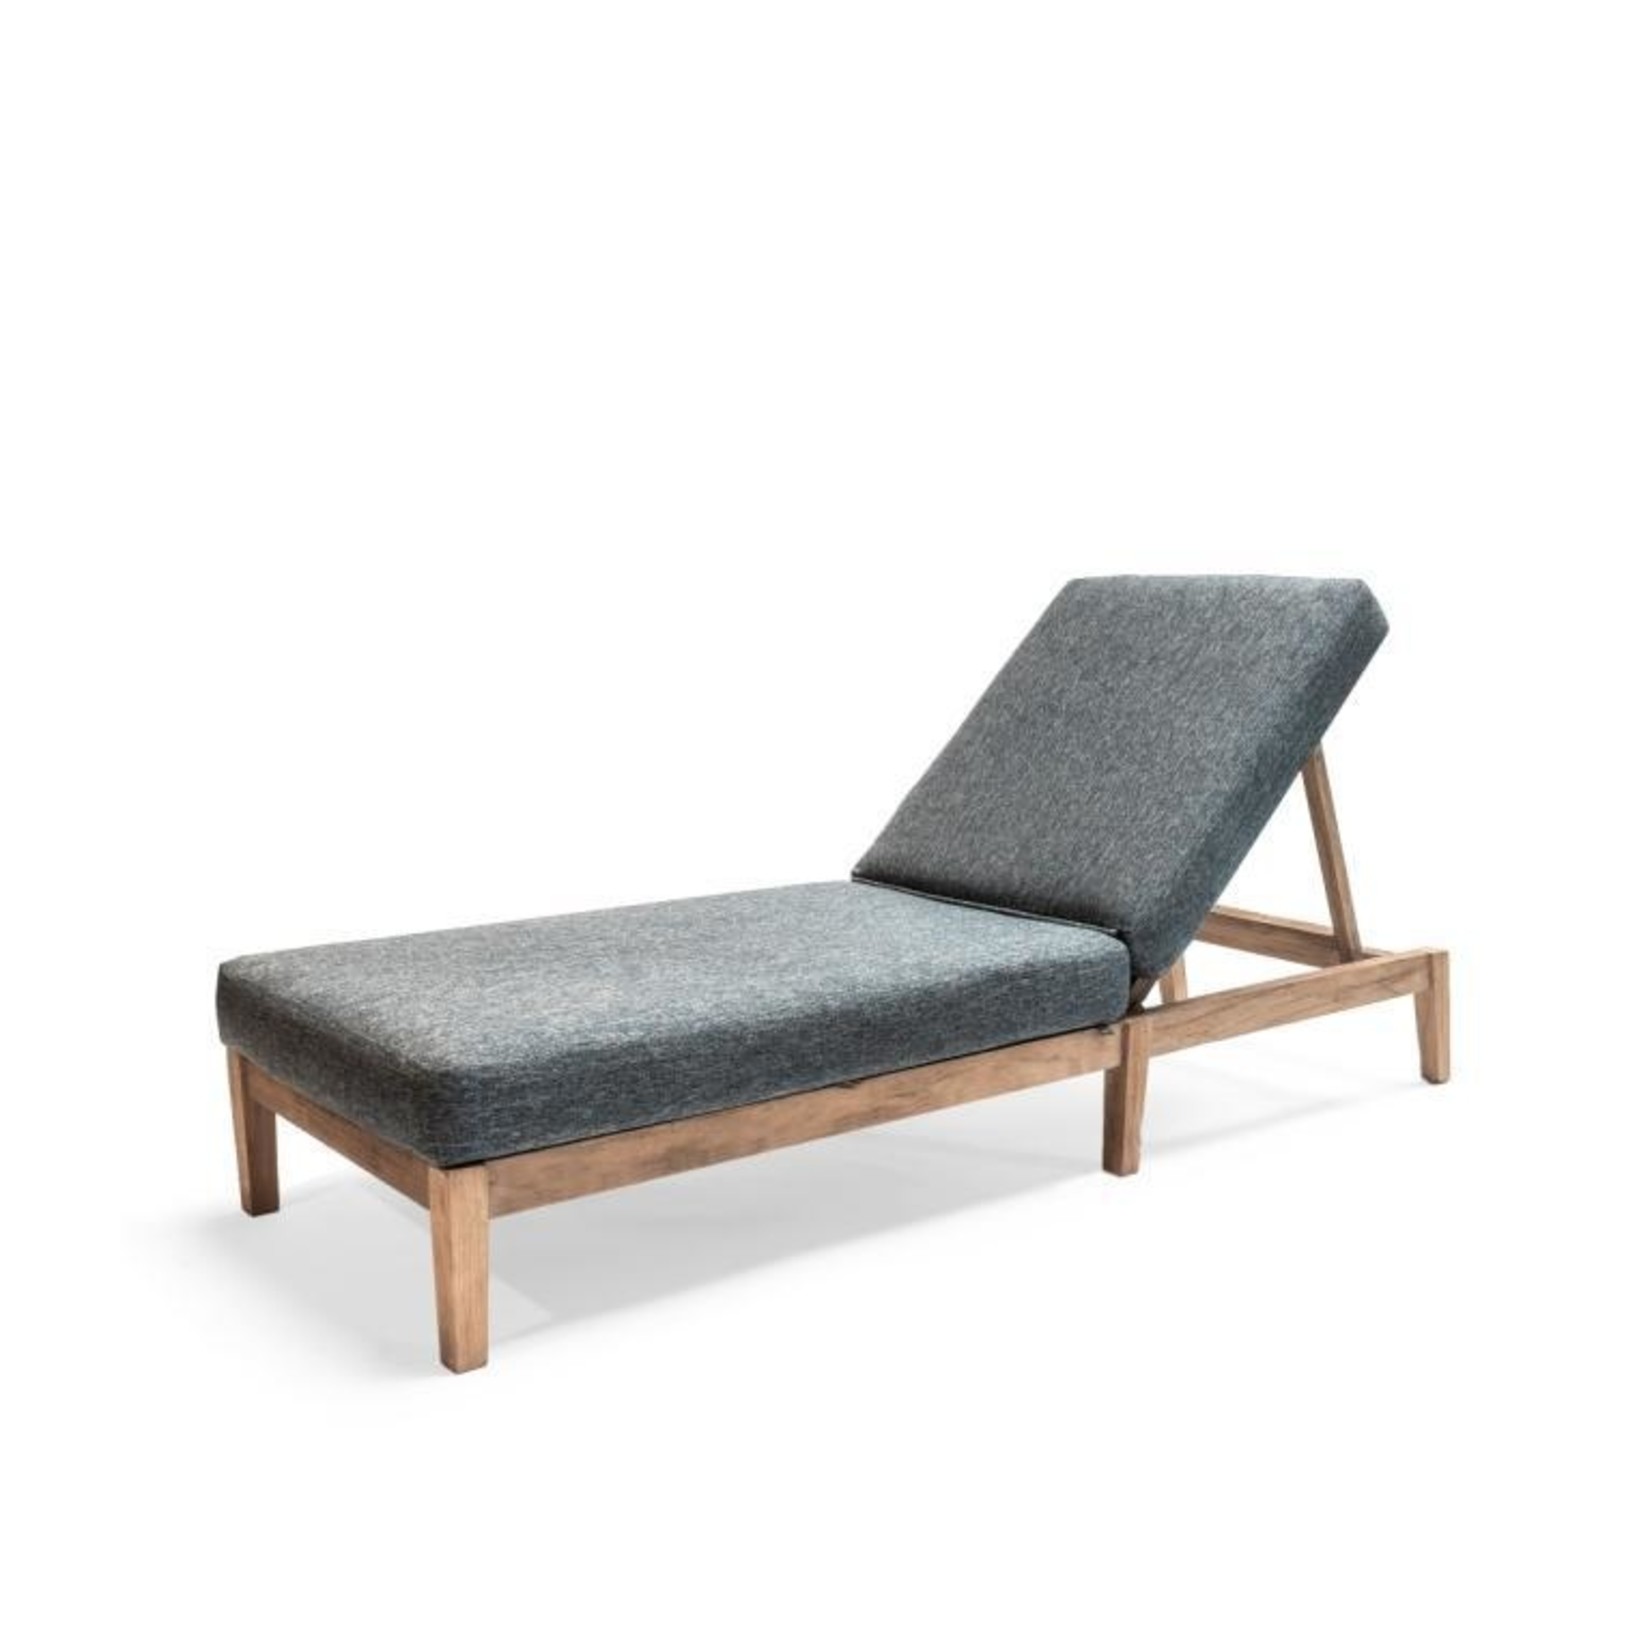 Gommaire Sunny Bed Copenhague | Reclaimed Teak Natural Gray + Cushion